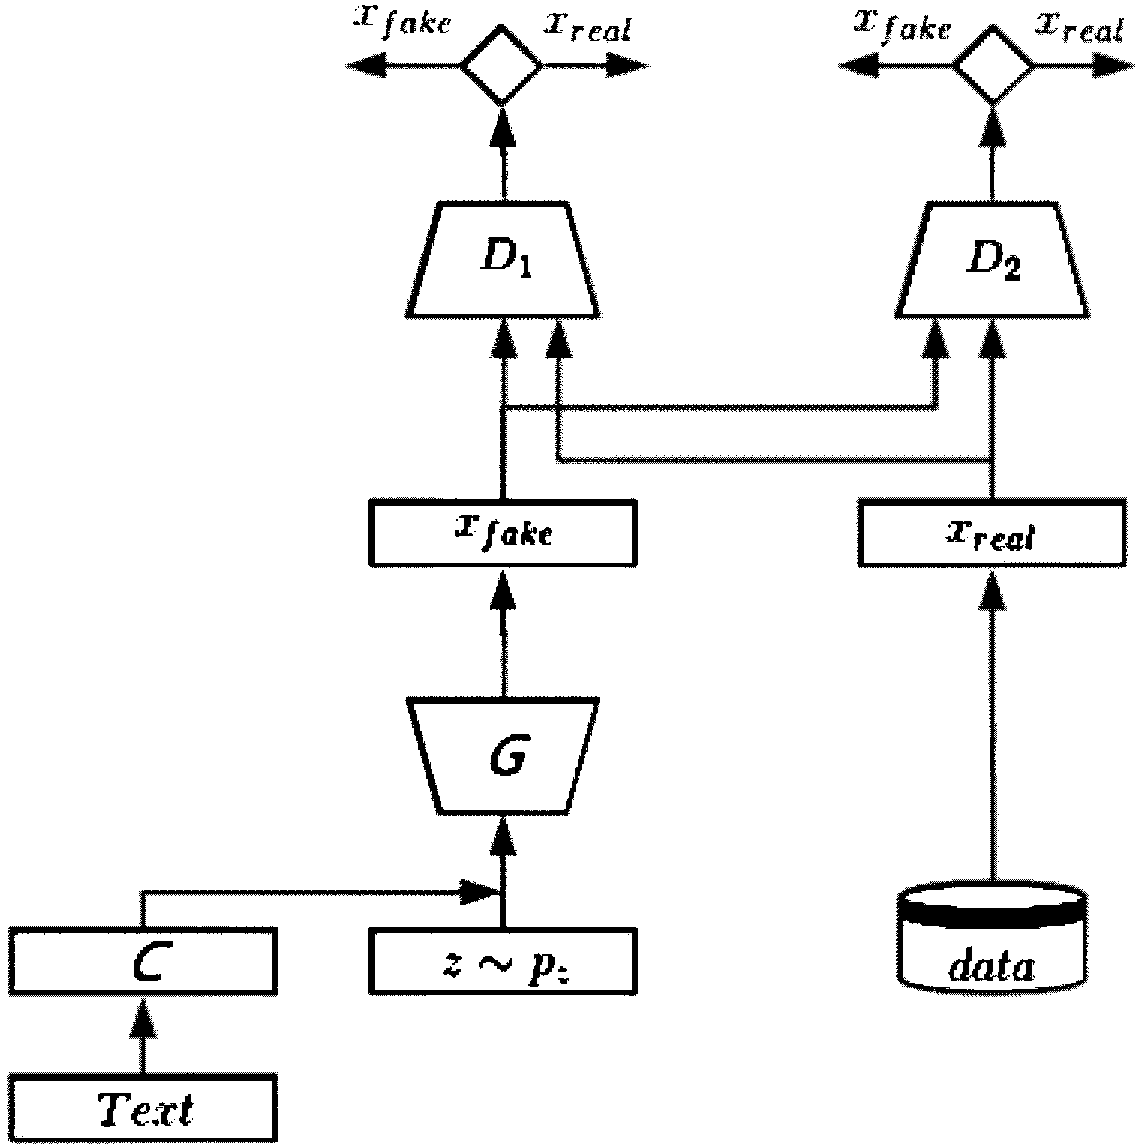 Image generation method of generative adversarial network based on dual discriminators